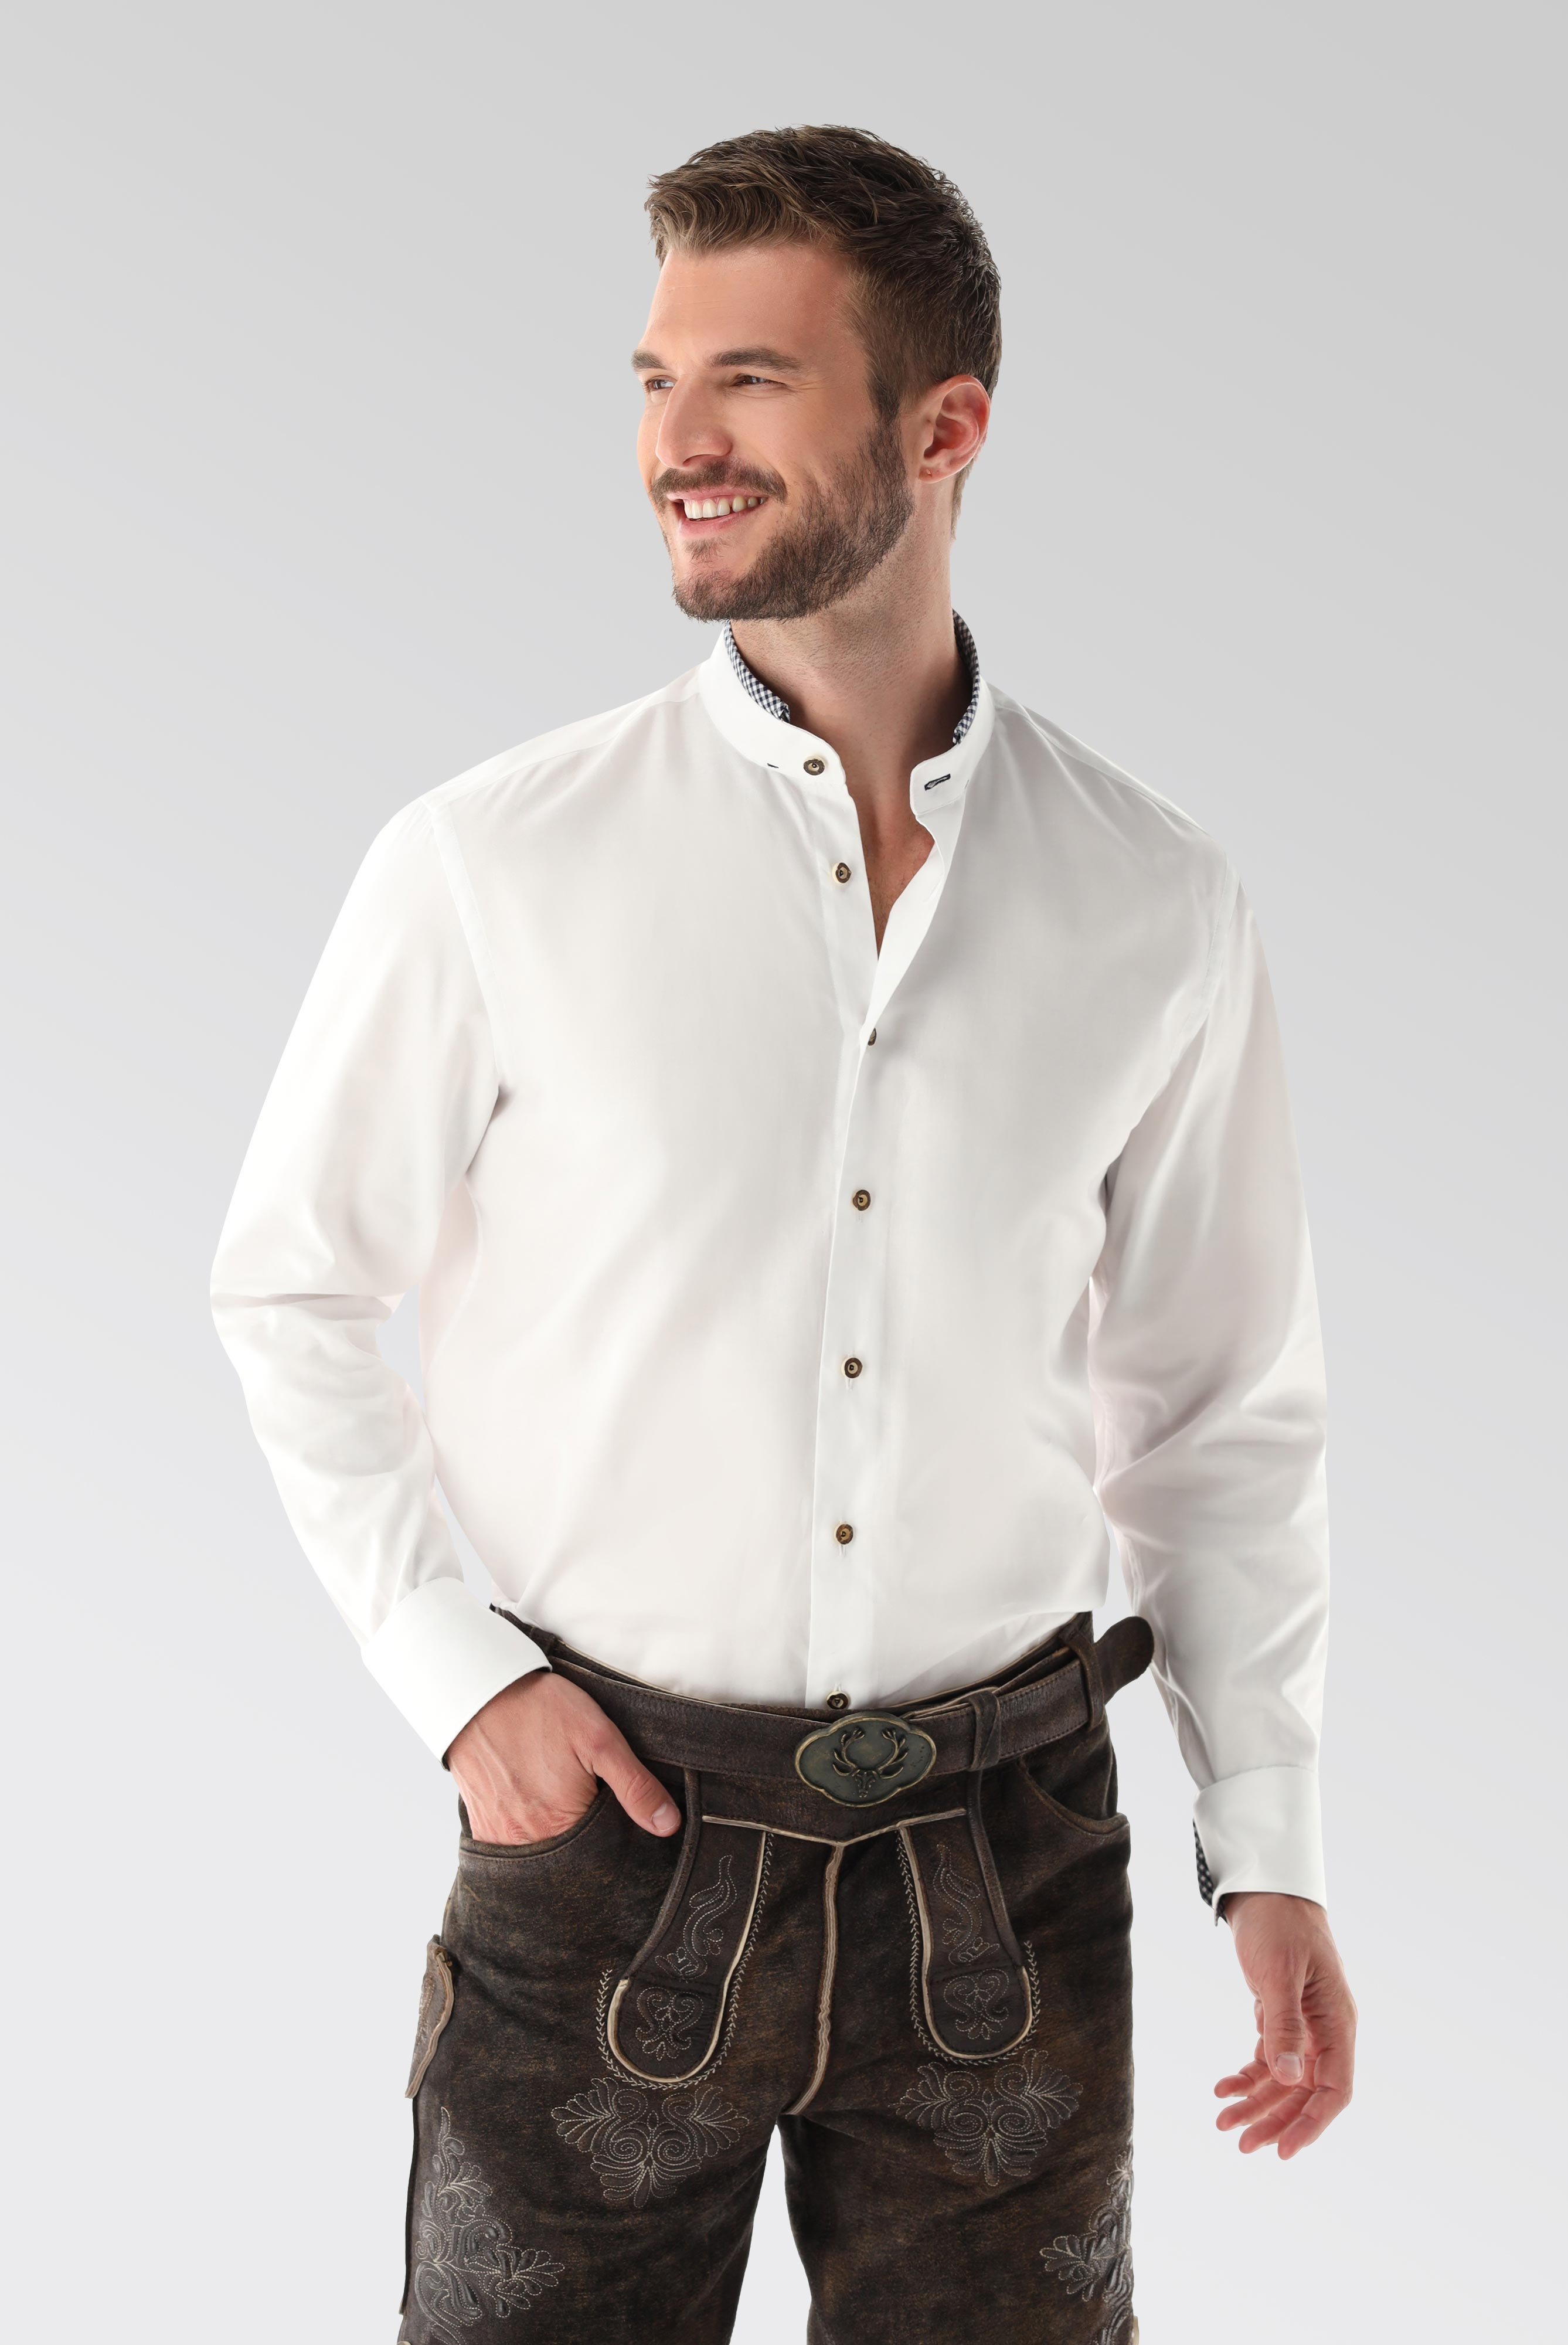 Festliche Hemden+Oxford Traditional Shirt with coloured detail+20.2081.8Q.150251.007.38